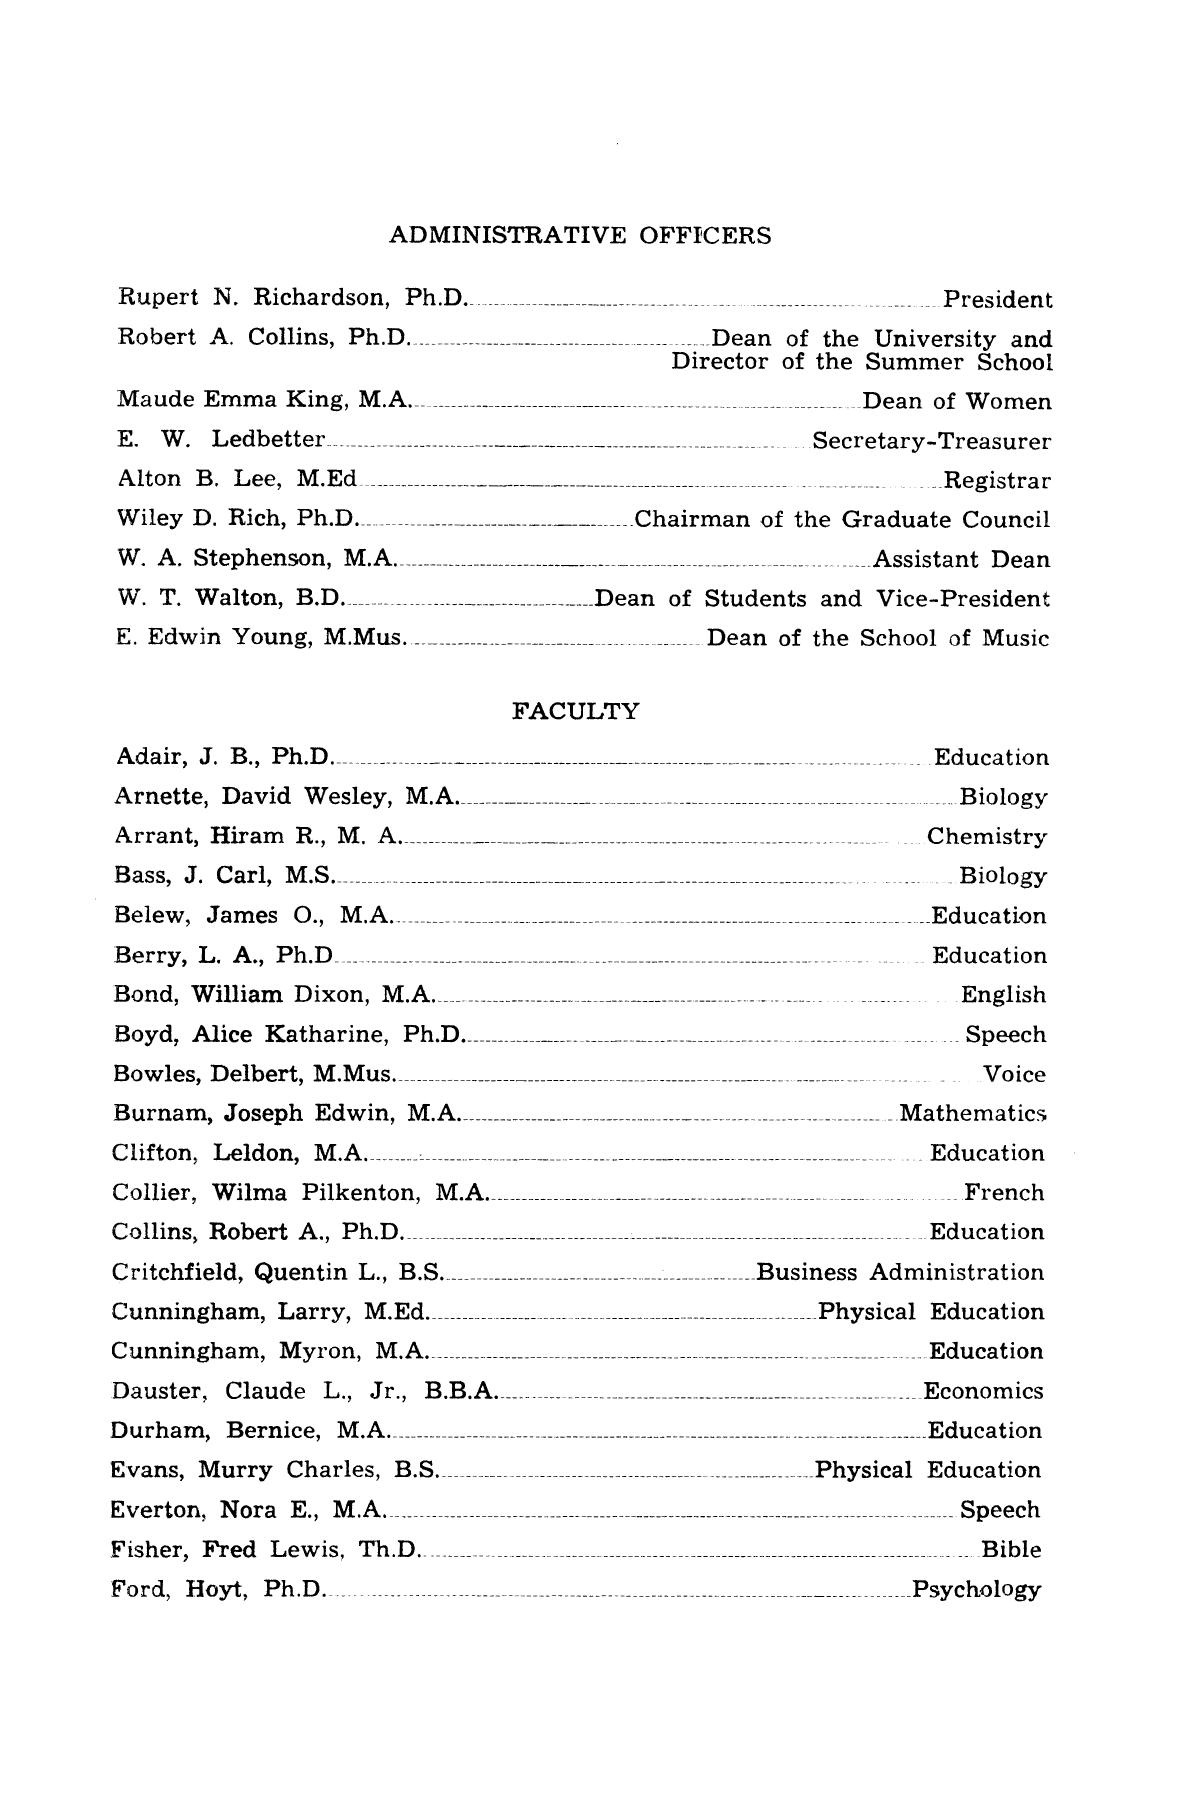 Catalog of Hardin-Simmons University, 1952 Summer Session
                                                
                                                    3
                                                